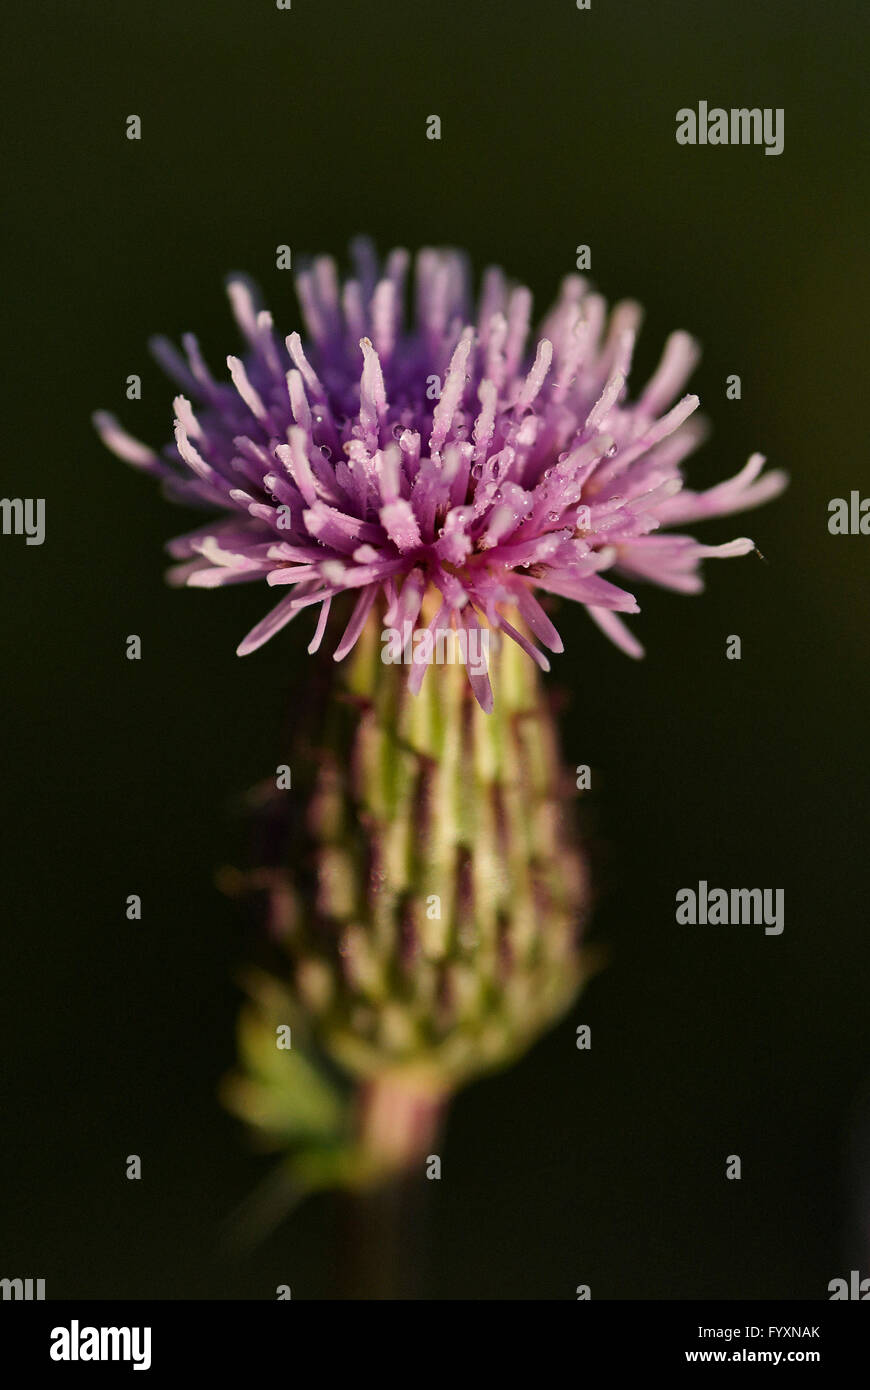 Thistle species Cirsium arvense. Stock Photo